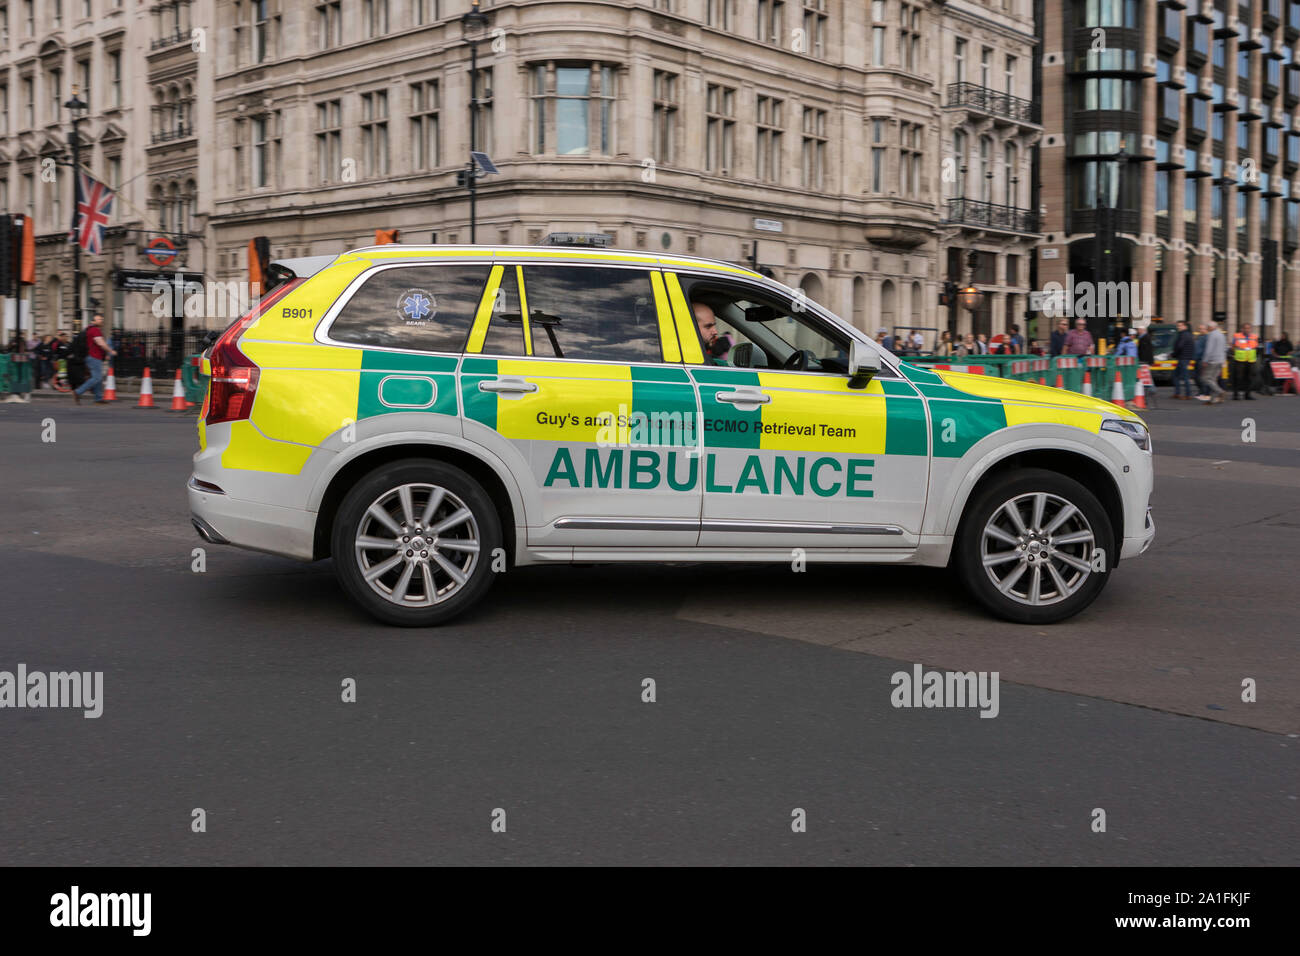 Parliament Square, Westminster, UK. 25th Sept, 2019. Guys and St Thomas ECMO Retrieval Team Ambulance. Stock Photo